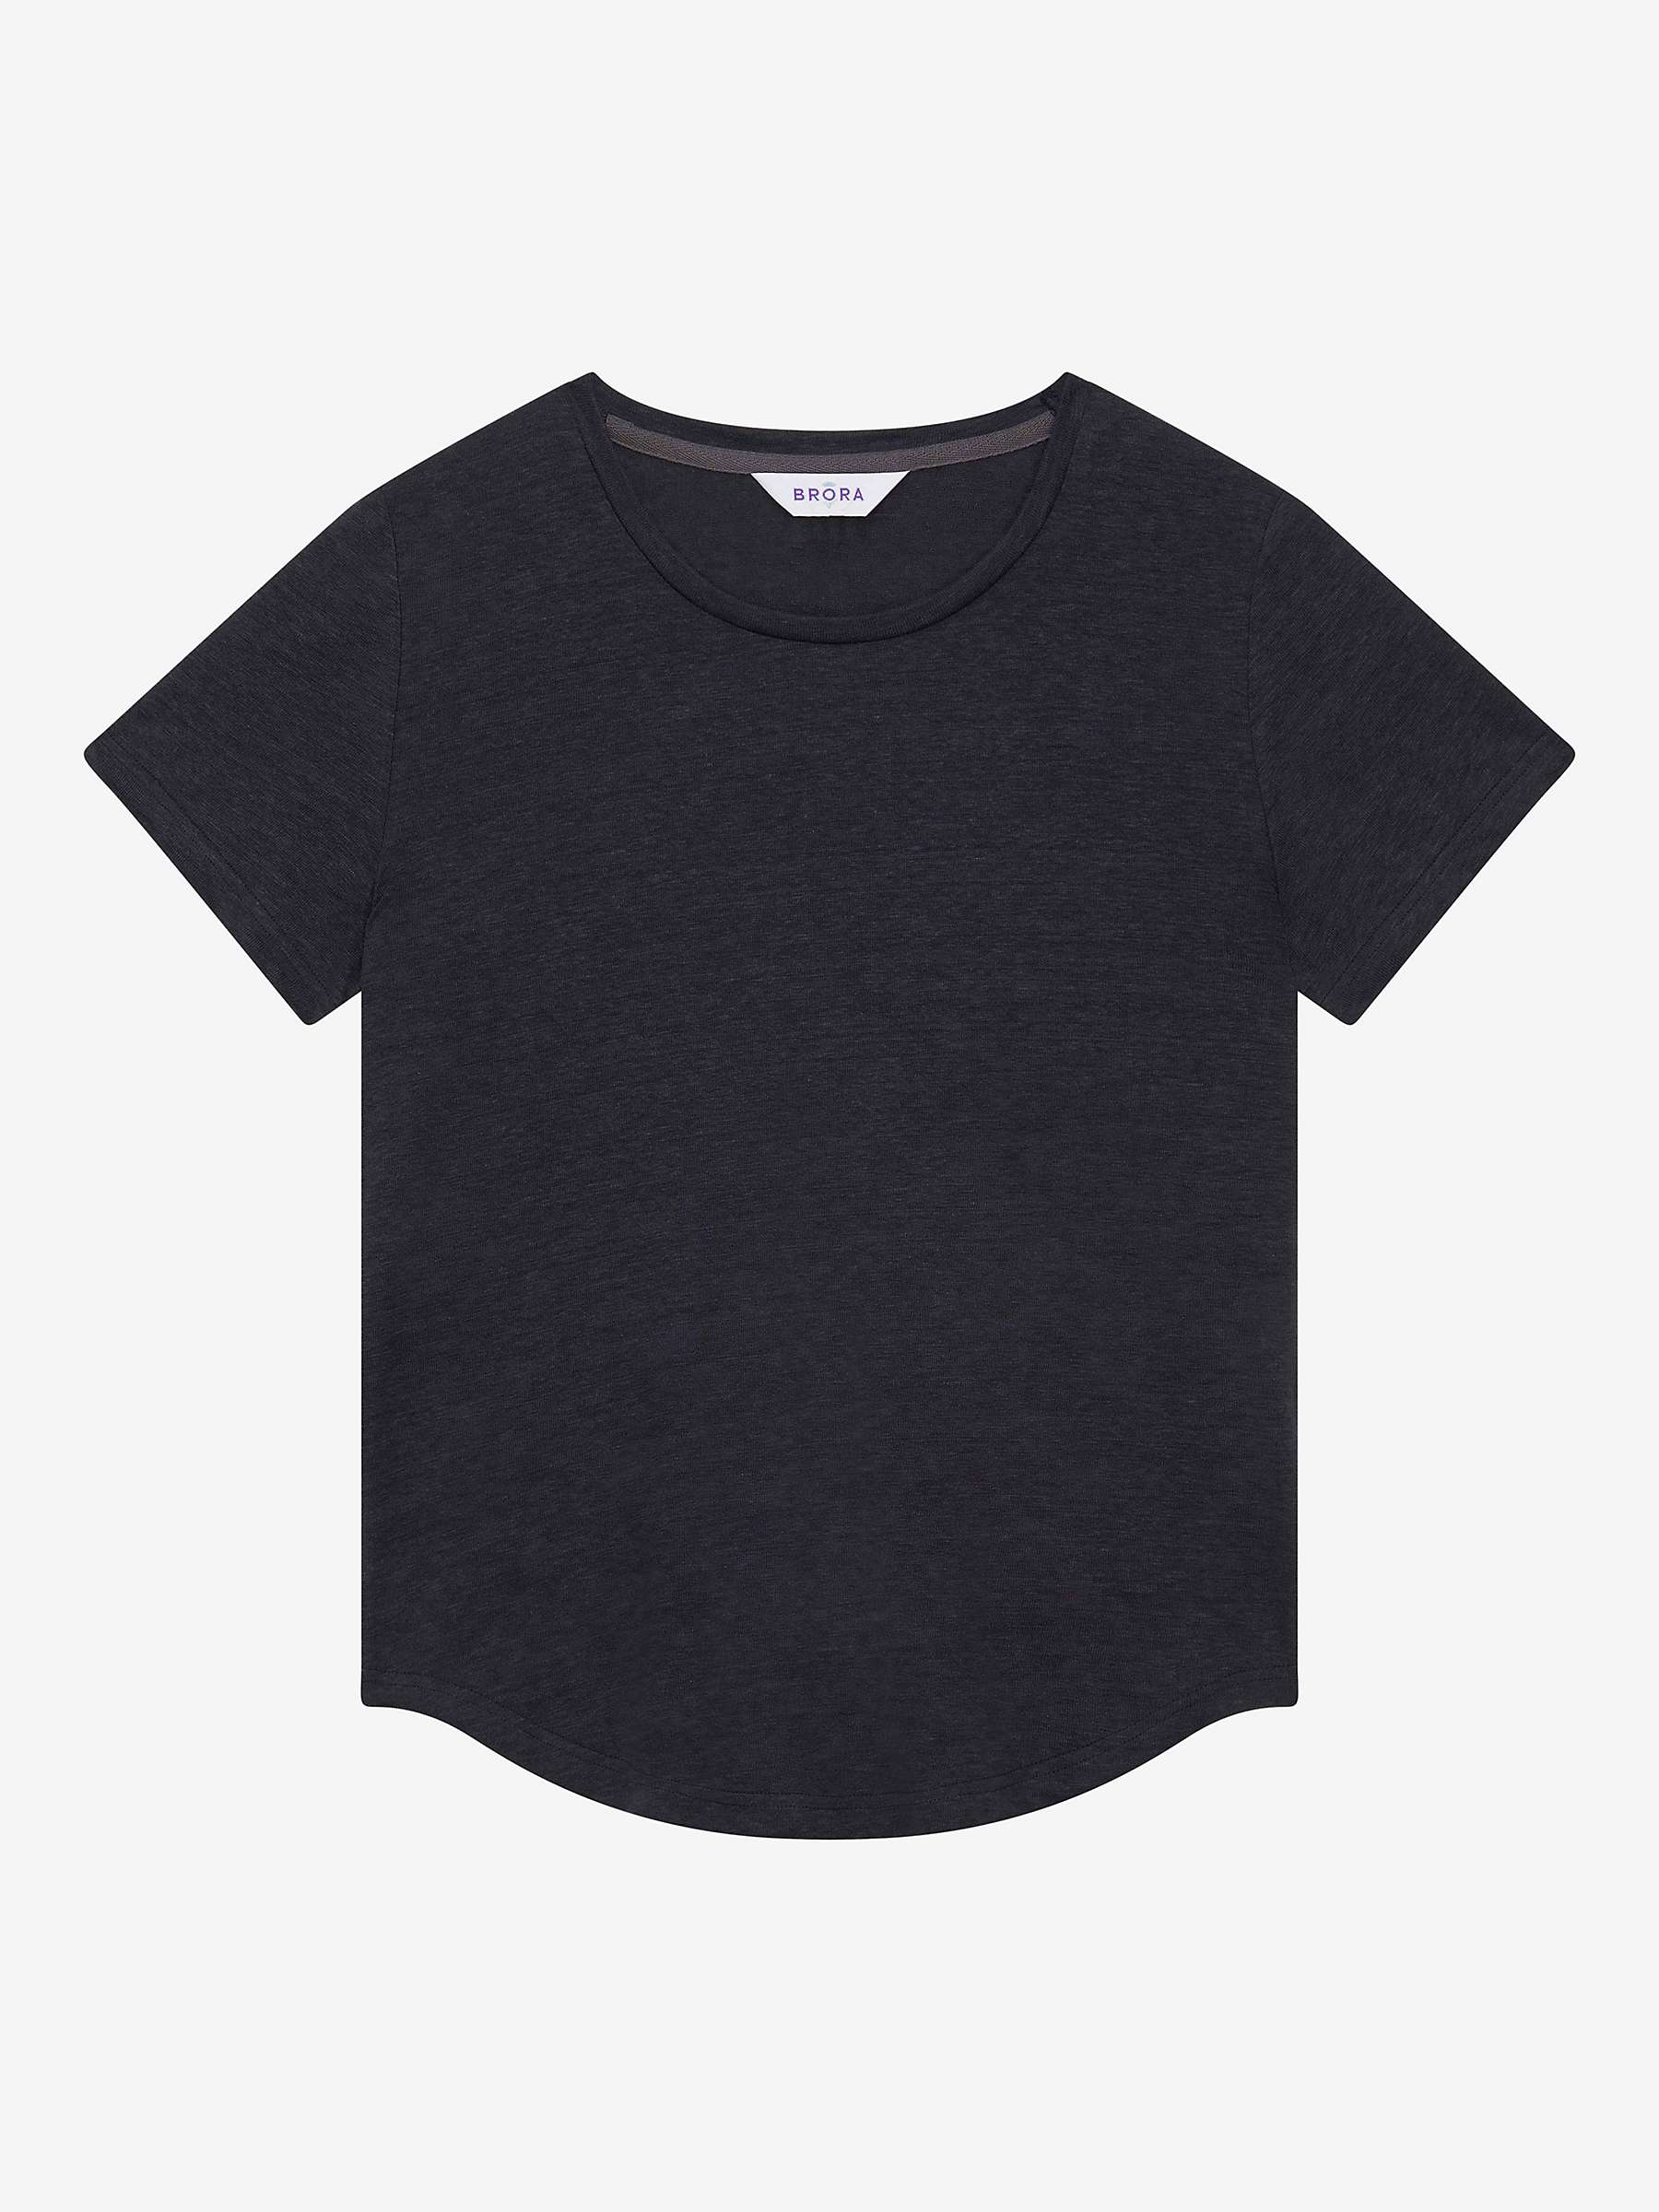 Buy Brora Linen T-Shirt Online at johnlewis.com